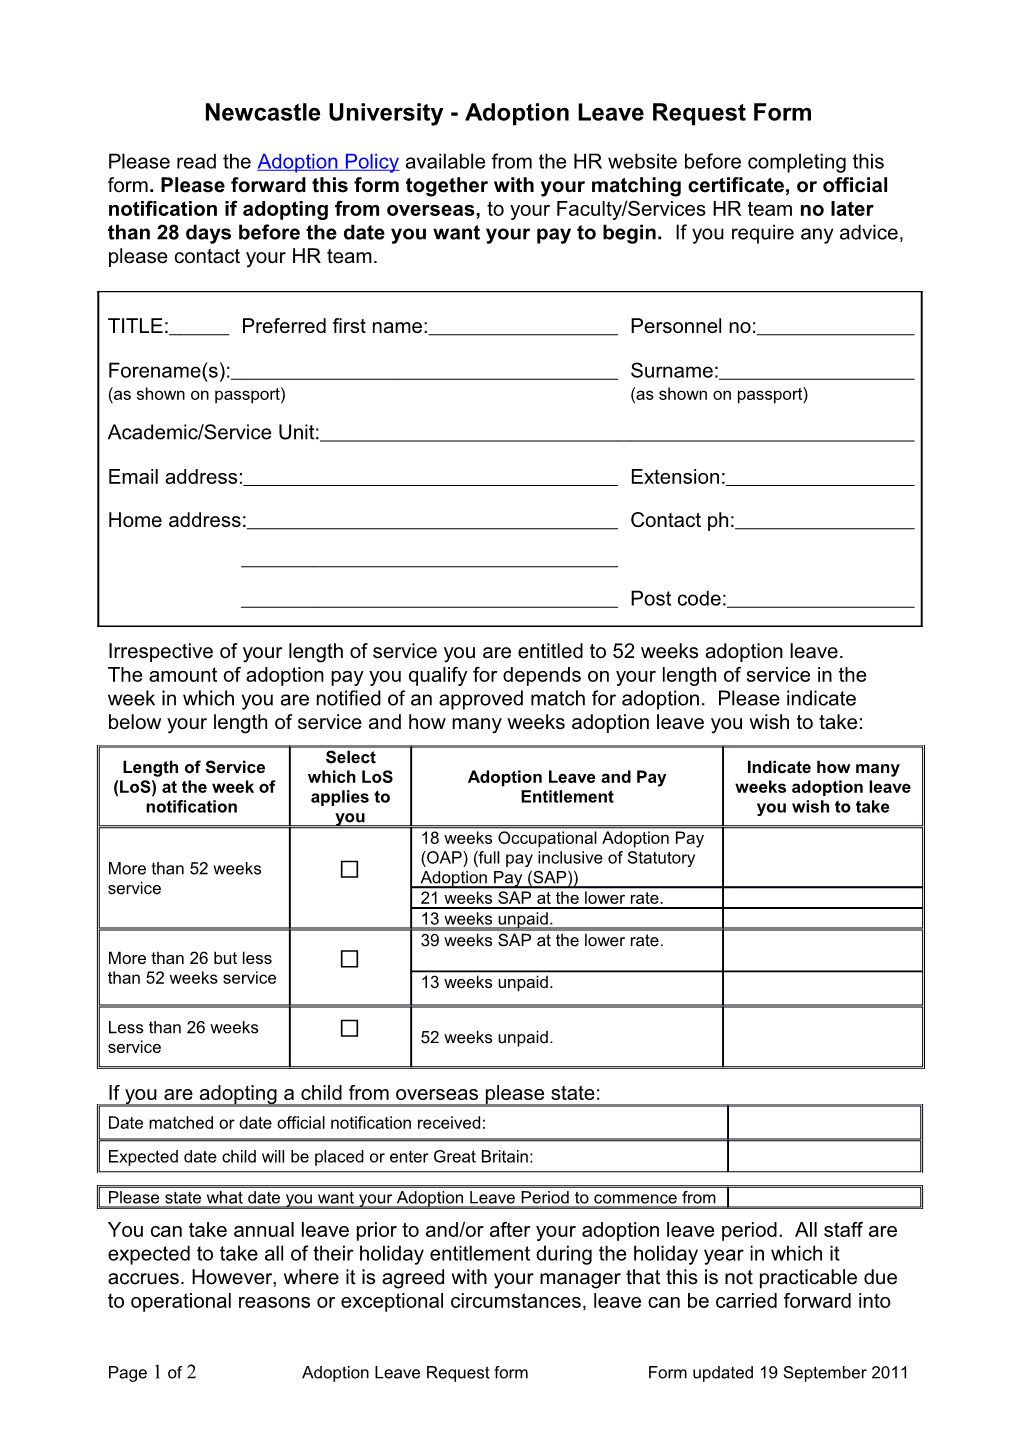 Newcastle University - Adoption Leave Request Form